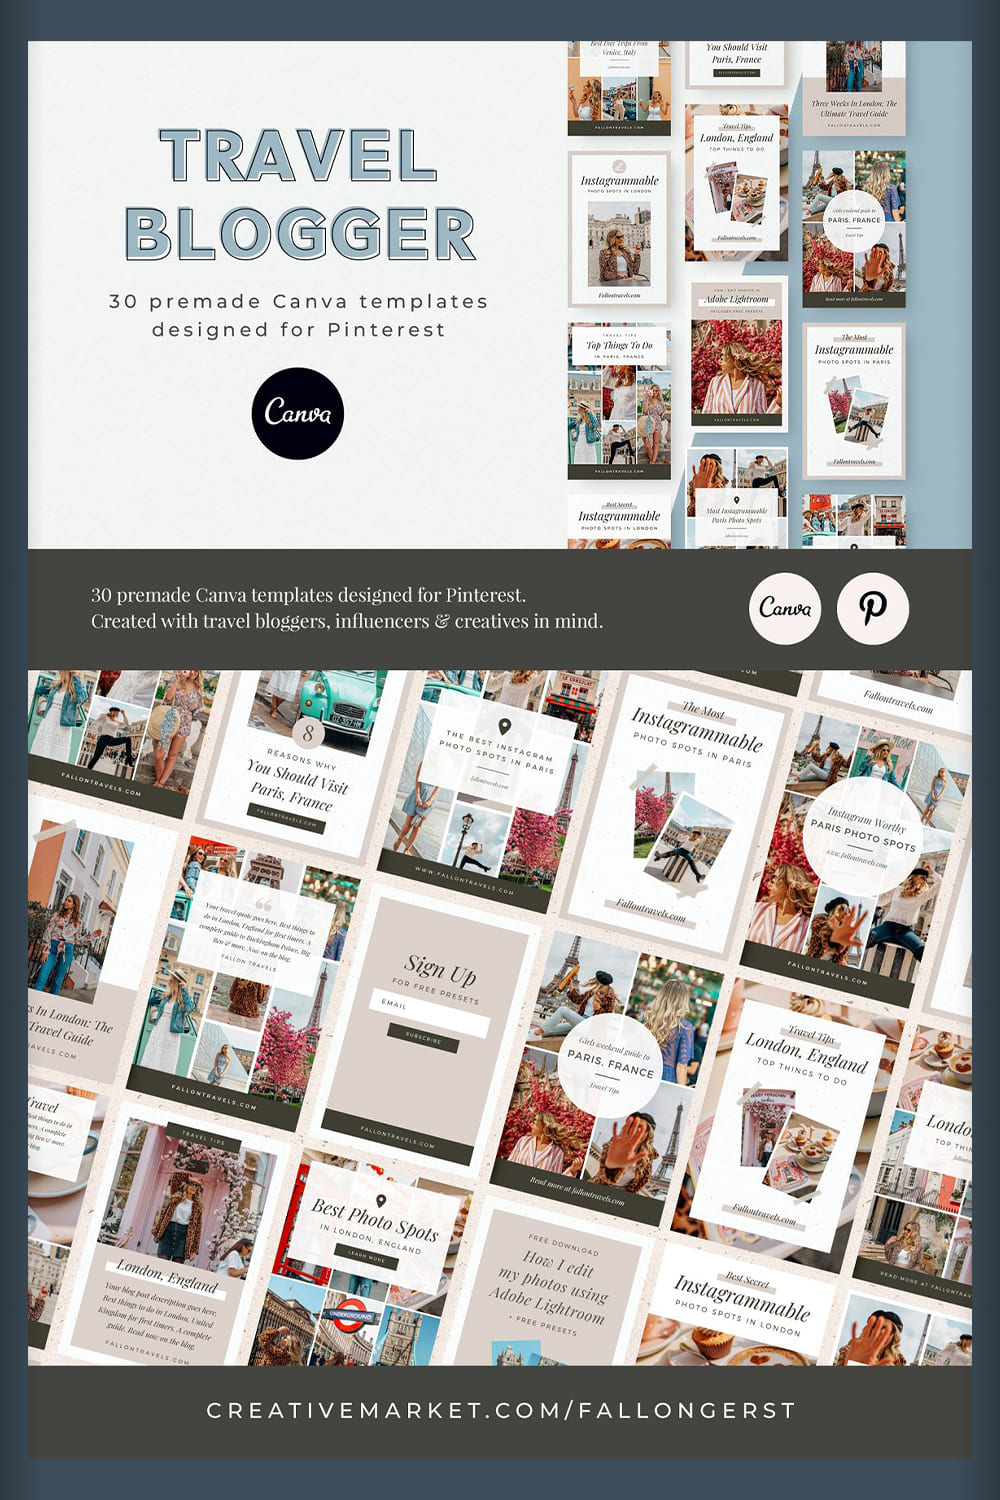 Premade Canva templates designed for Pinterest.